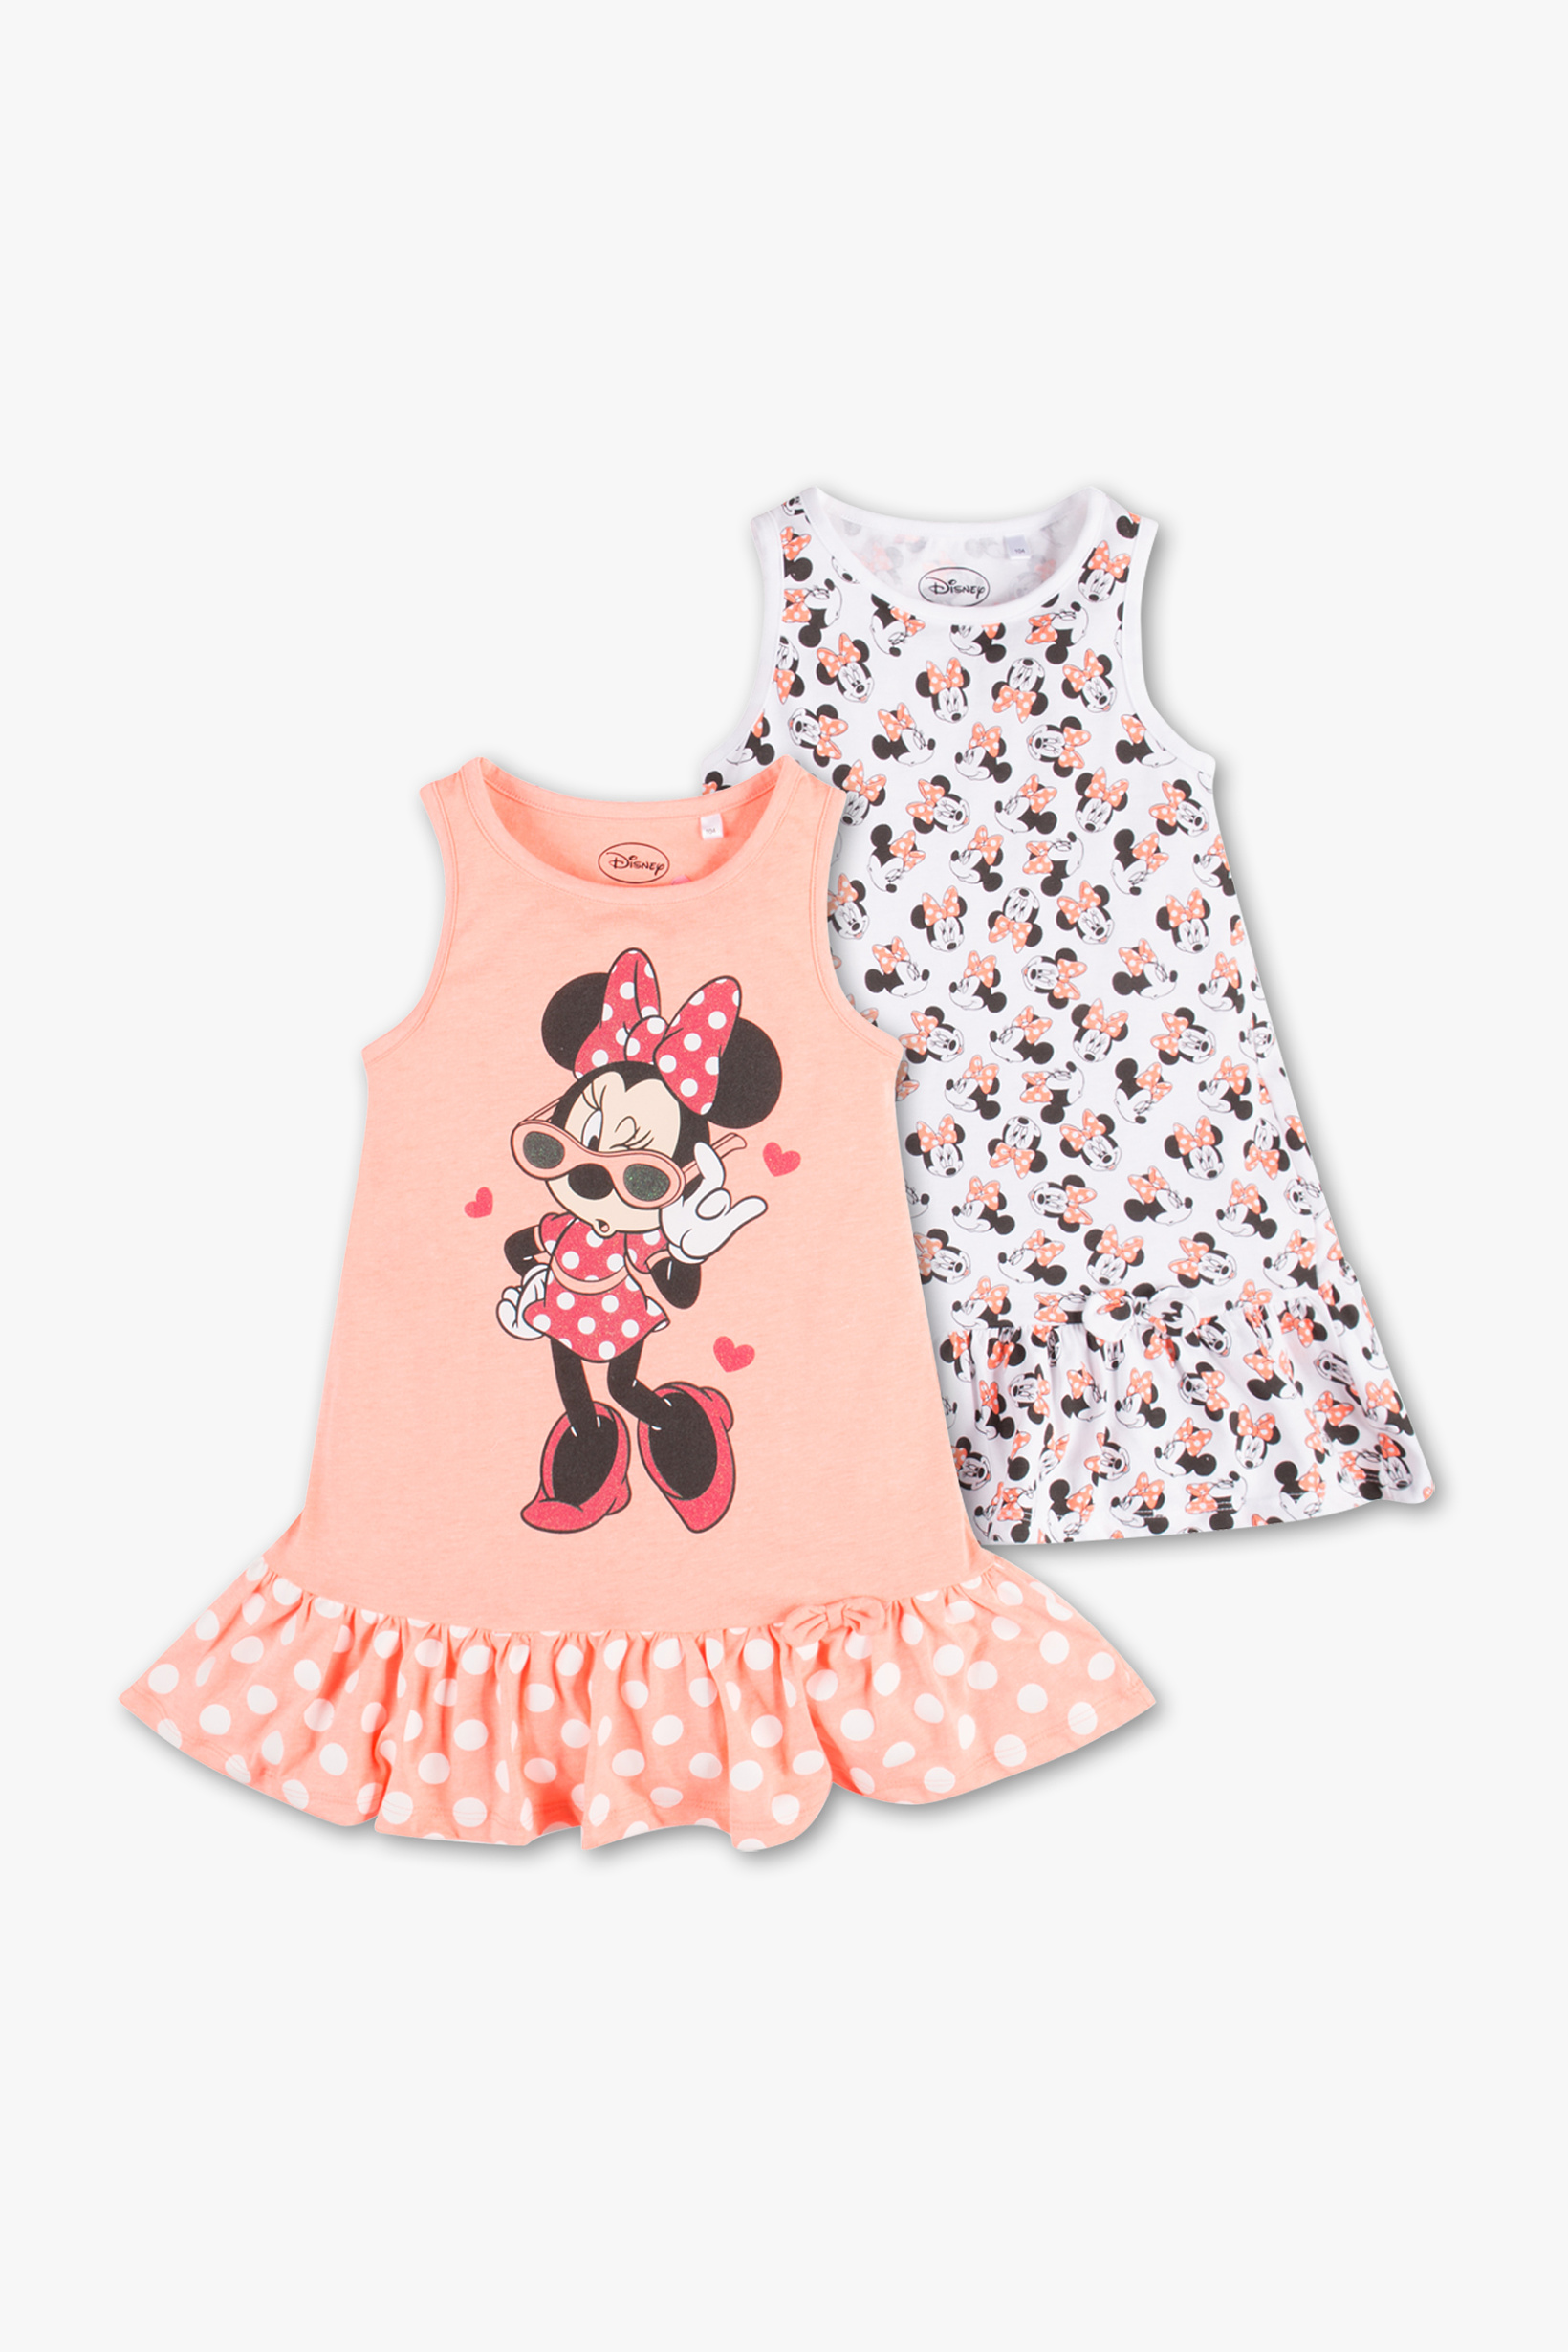 Disney Girls Minnie Mouse jurk biokatoen duopack